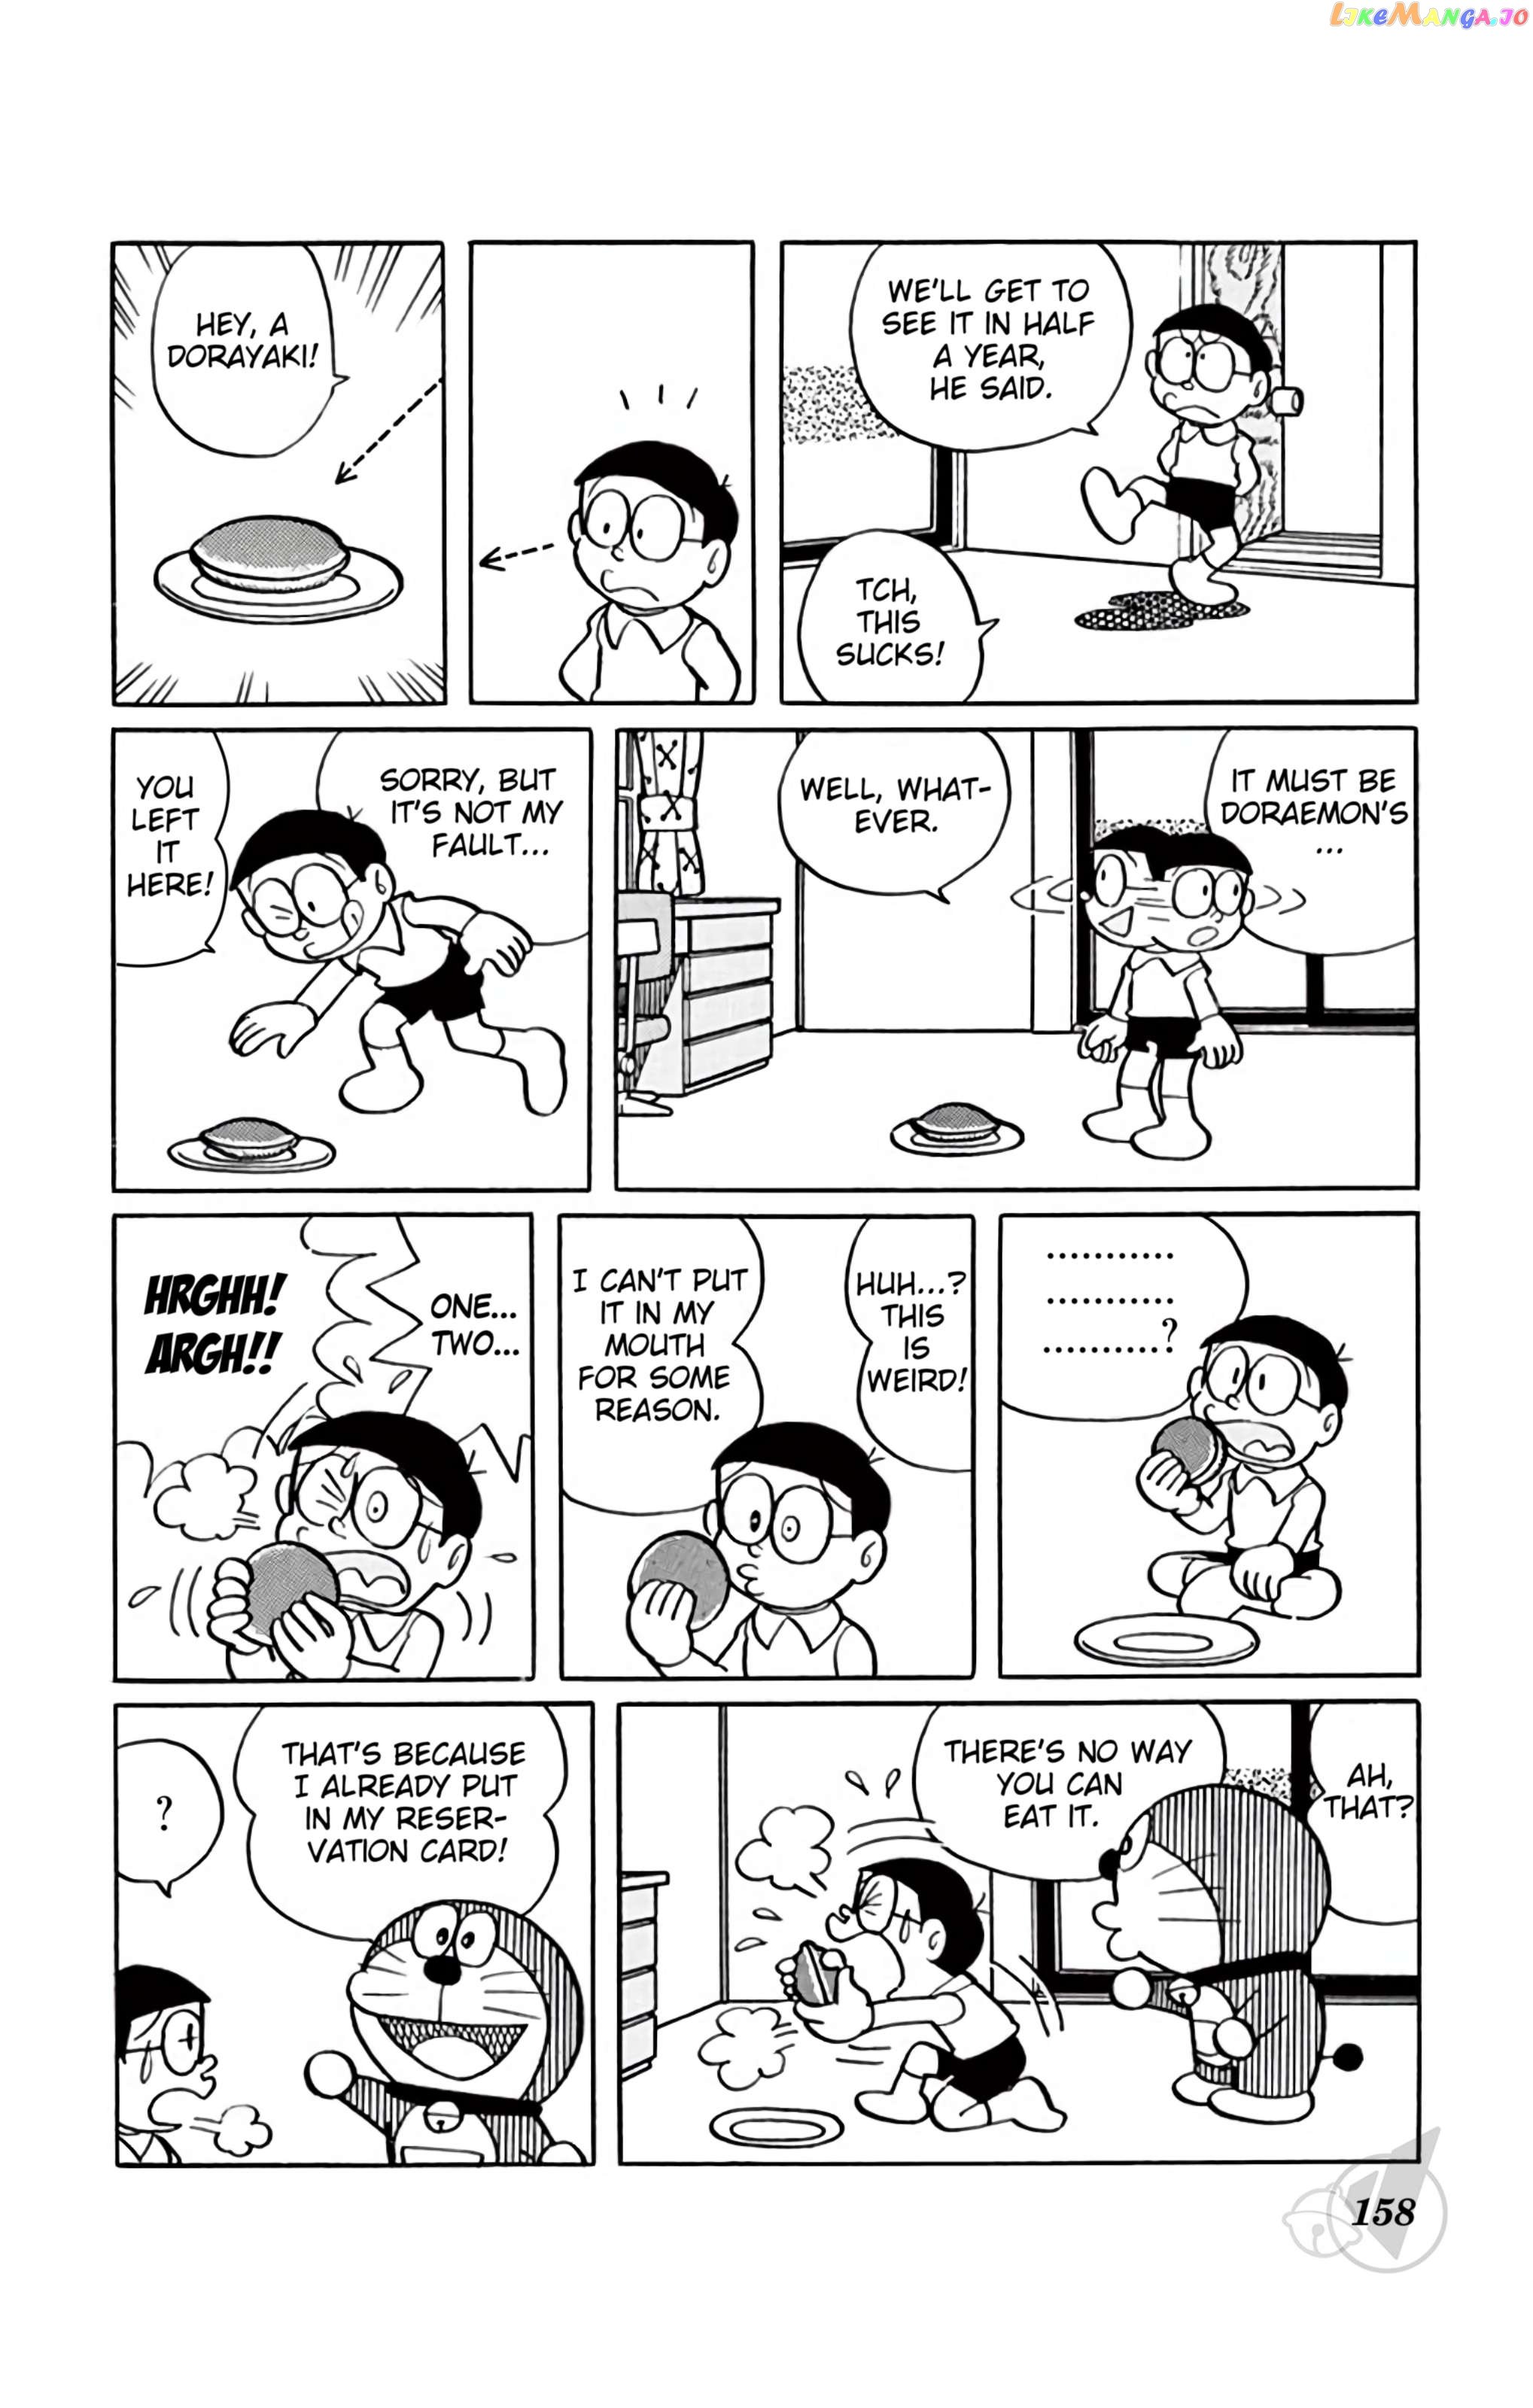 Doraemon - episode 320 - 2